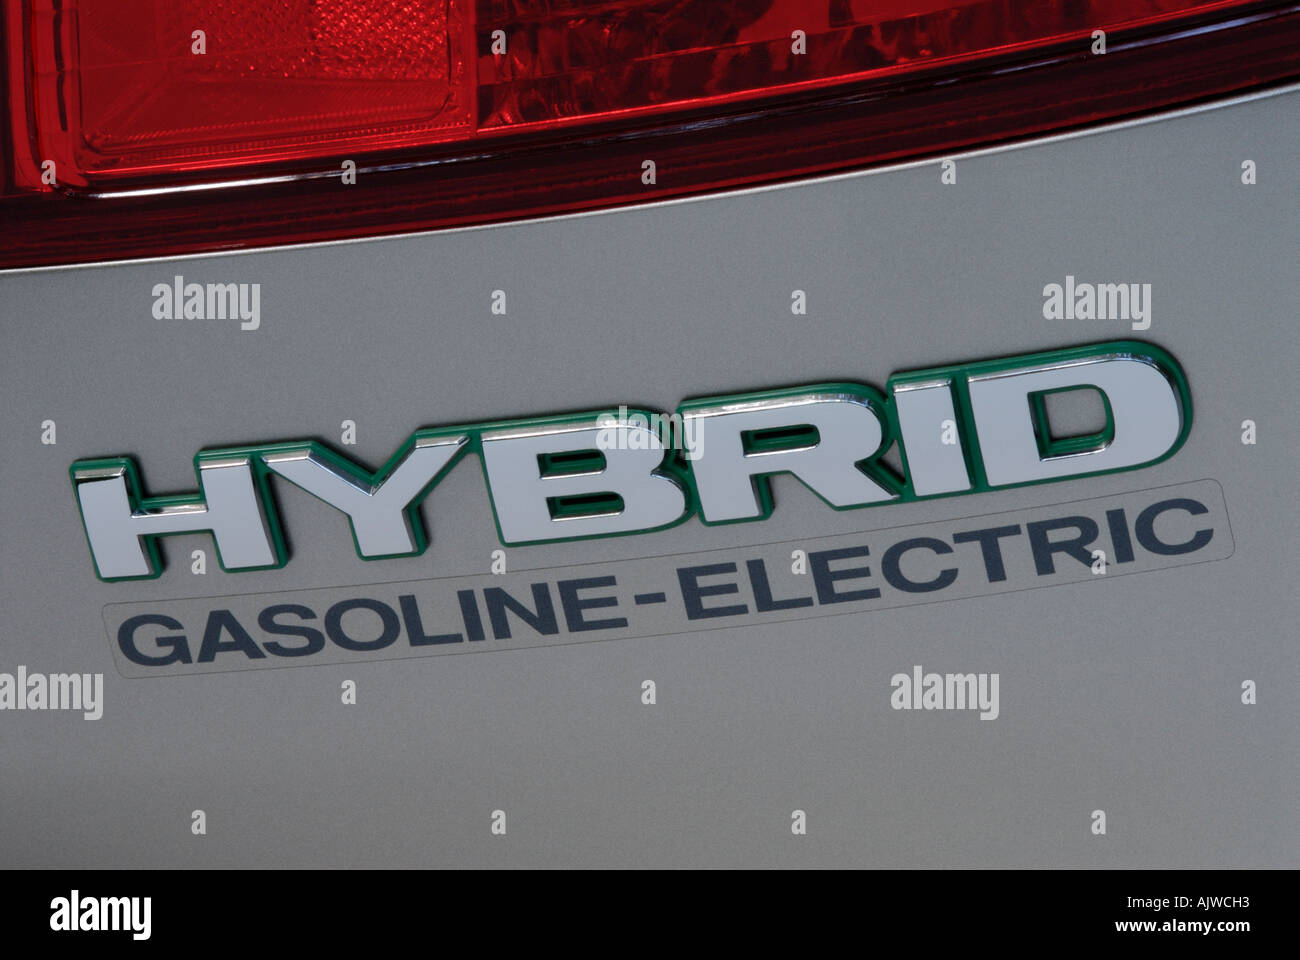 Gasoline-electric hybrid car logo Stock Photo